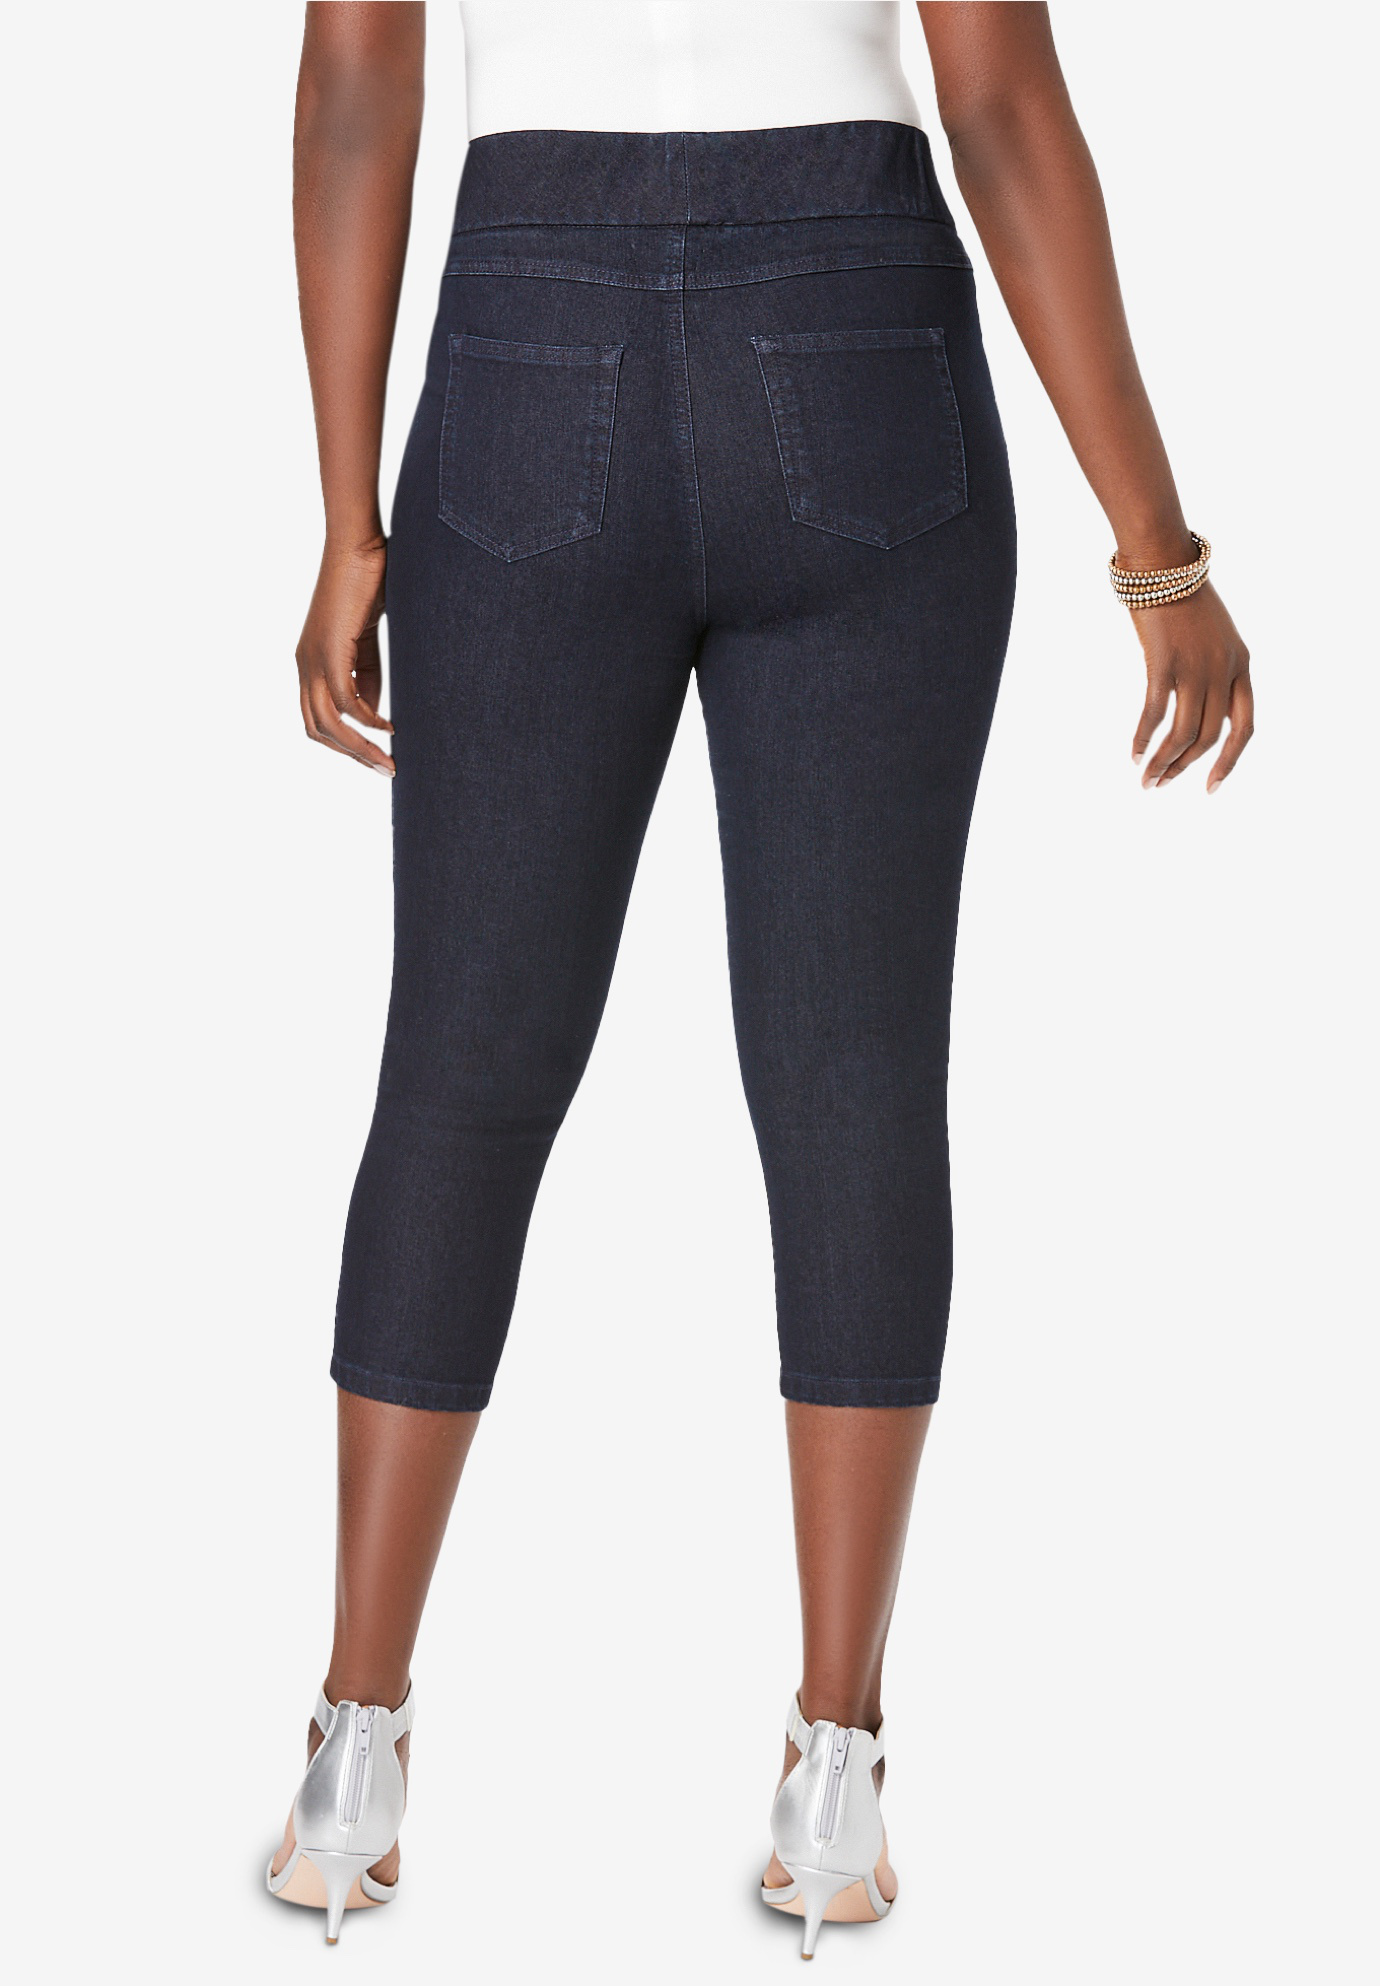 Jessica London Women's Plus Size Comfort Waist Stretch Denim Capris Pull On Jeans Stretch Denim Jeggings - image 3 of 6